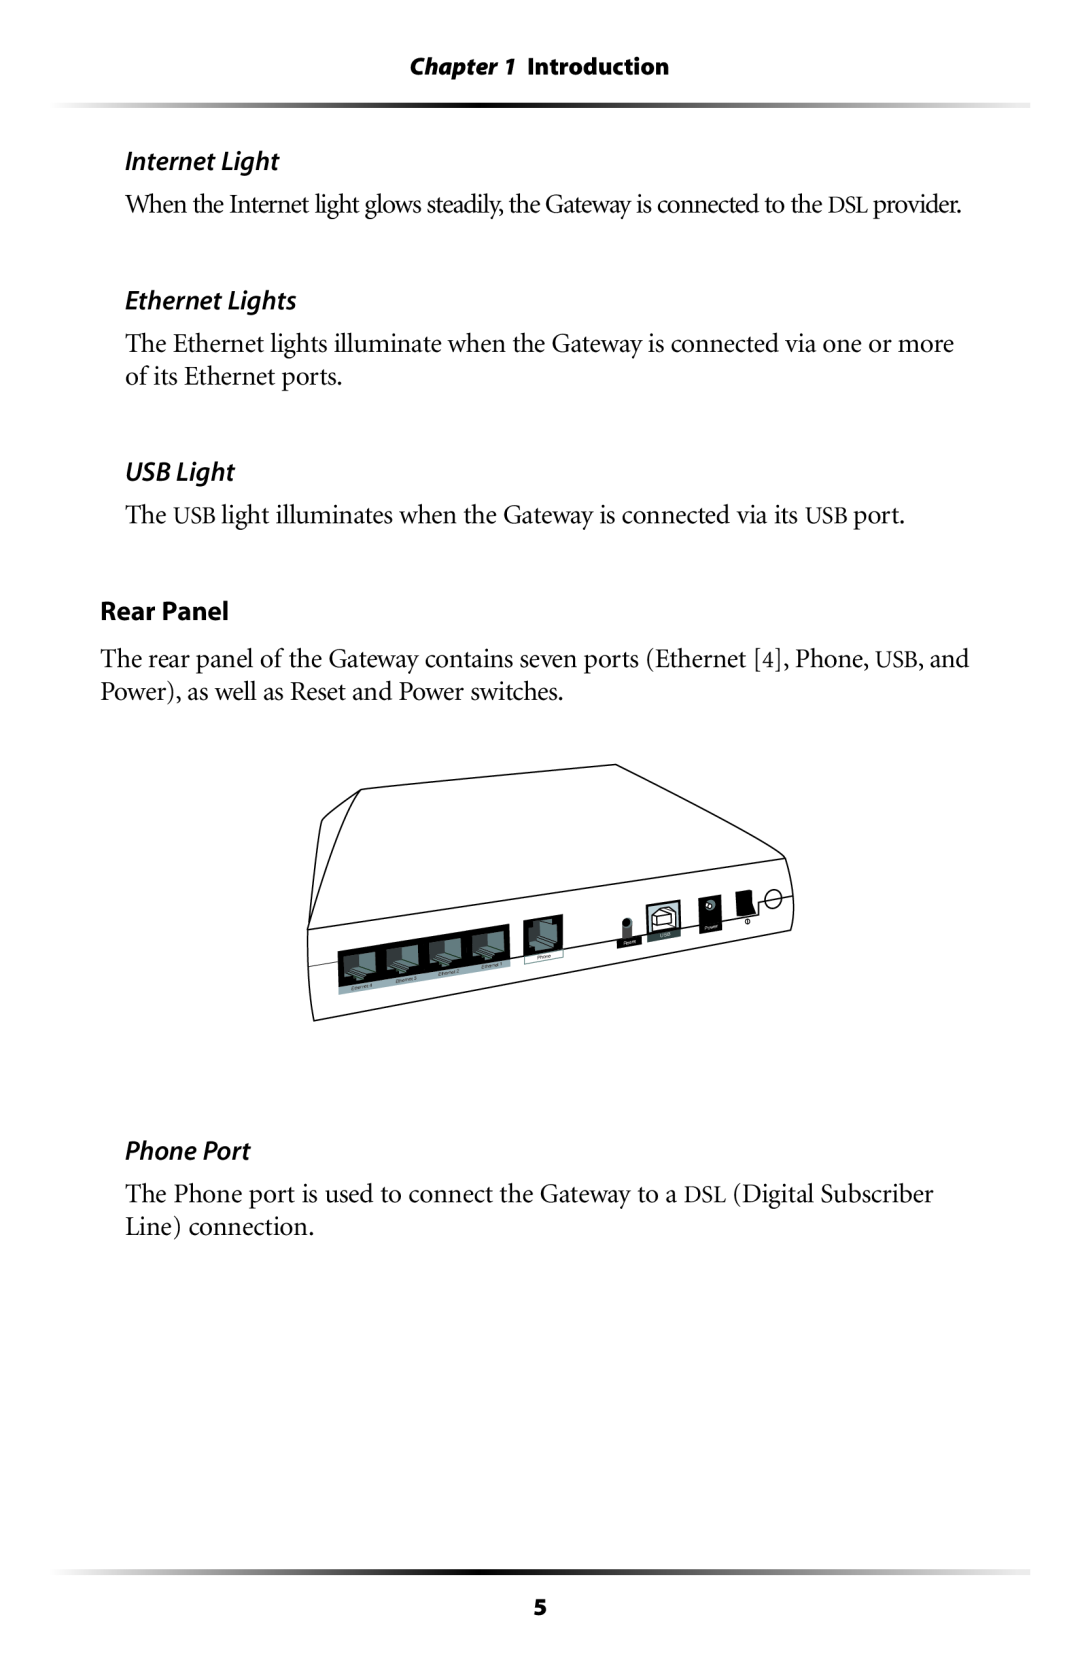 Gateway GT704 user manual Internet Light, Ethernet Lights, USB Light, Phone Port, Rear Panel 